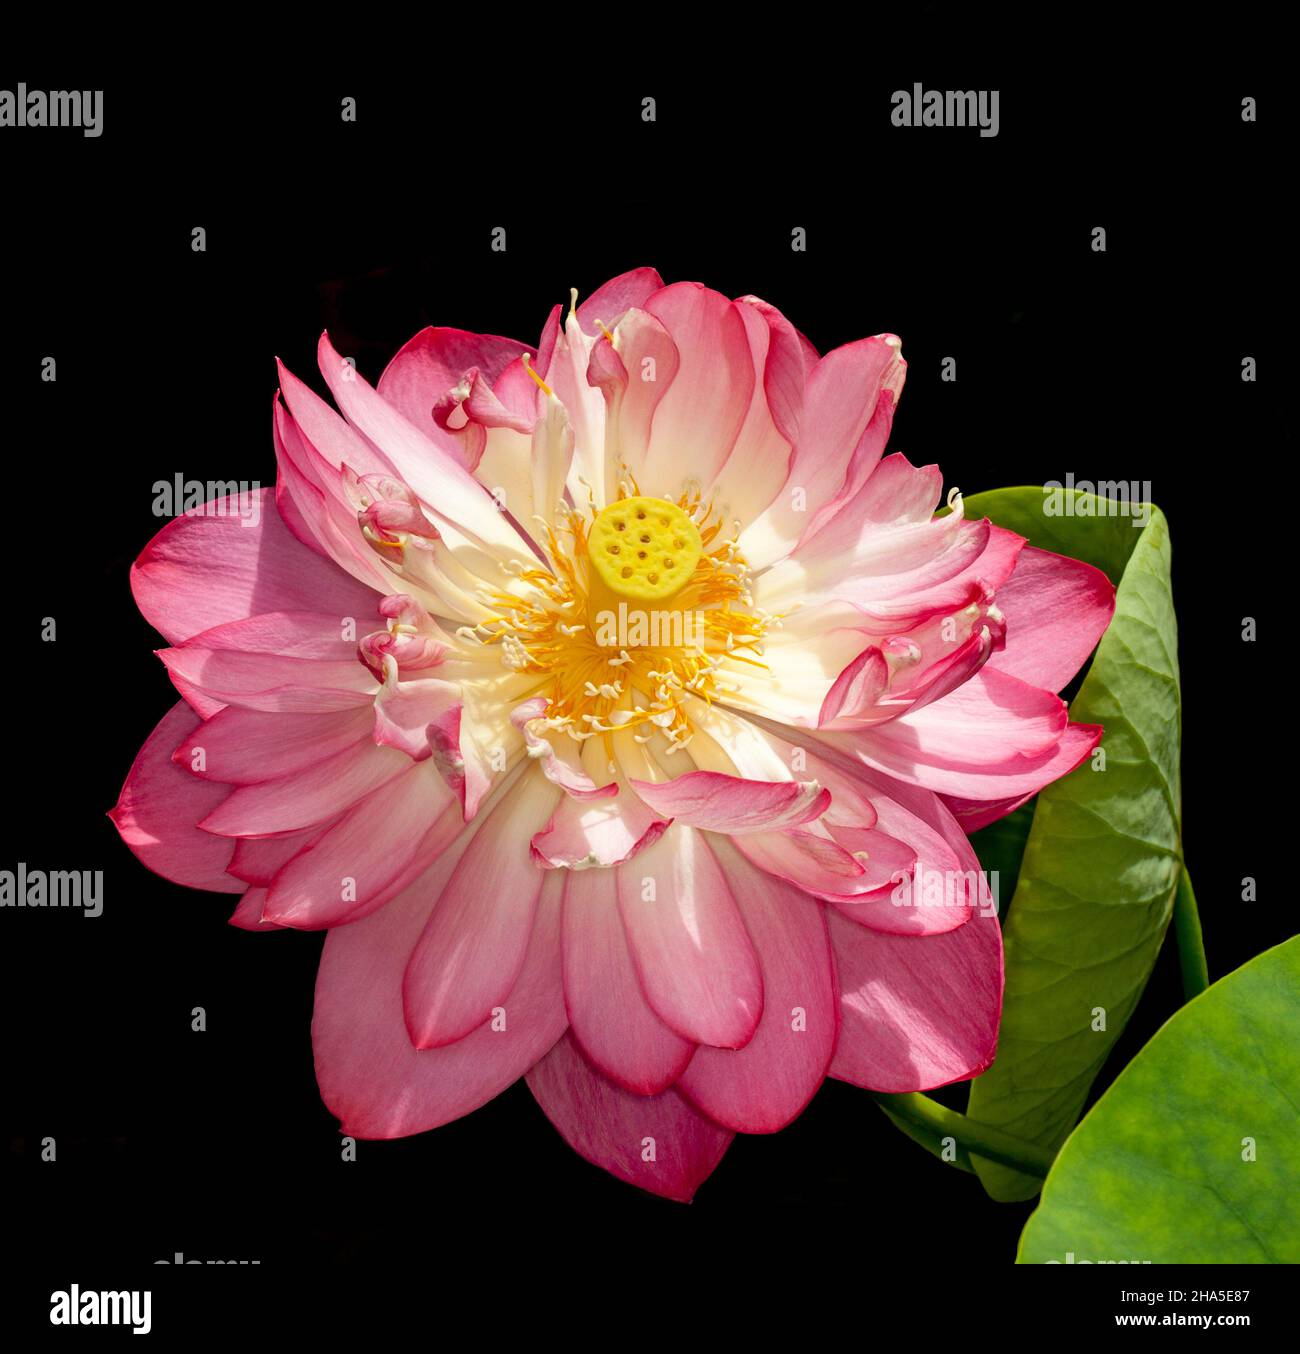 Spectacular large pink flower of Sacred Lotus, Nelumbo nucifera, an aquatic plant, on a black background, in Australia Stock Photo